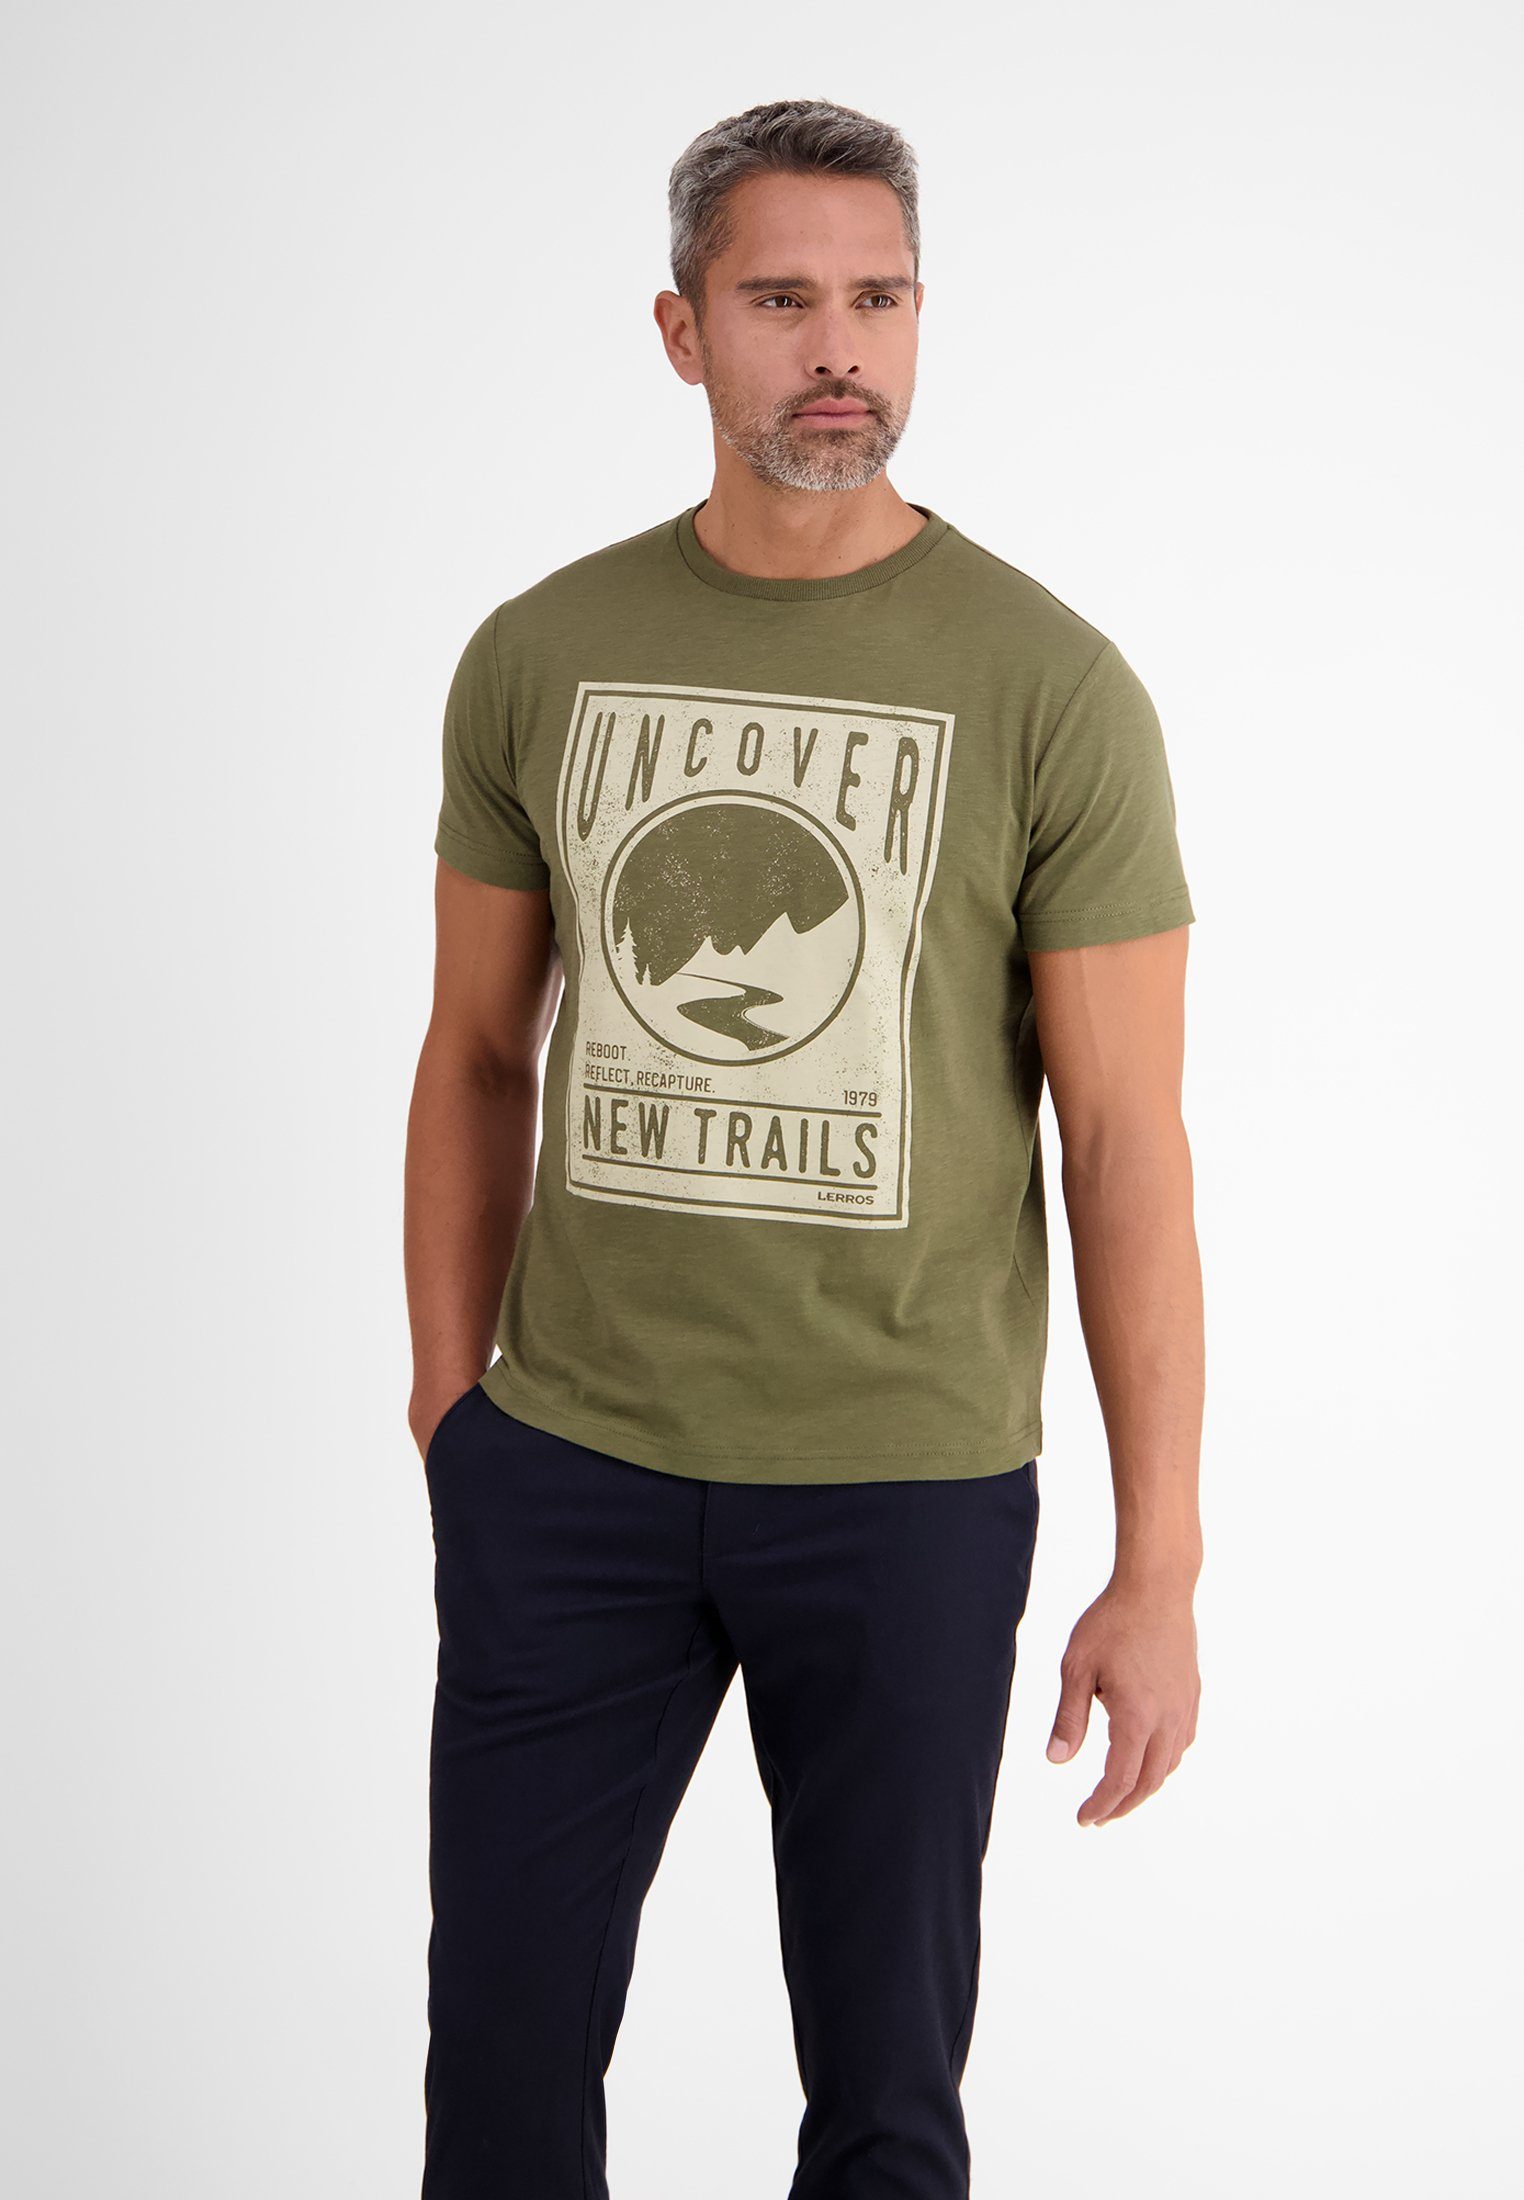 LERROS T-Shirt LERROS Print-T-Shirt *Uncover new trails* GREEN OLIV